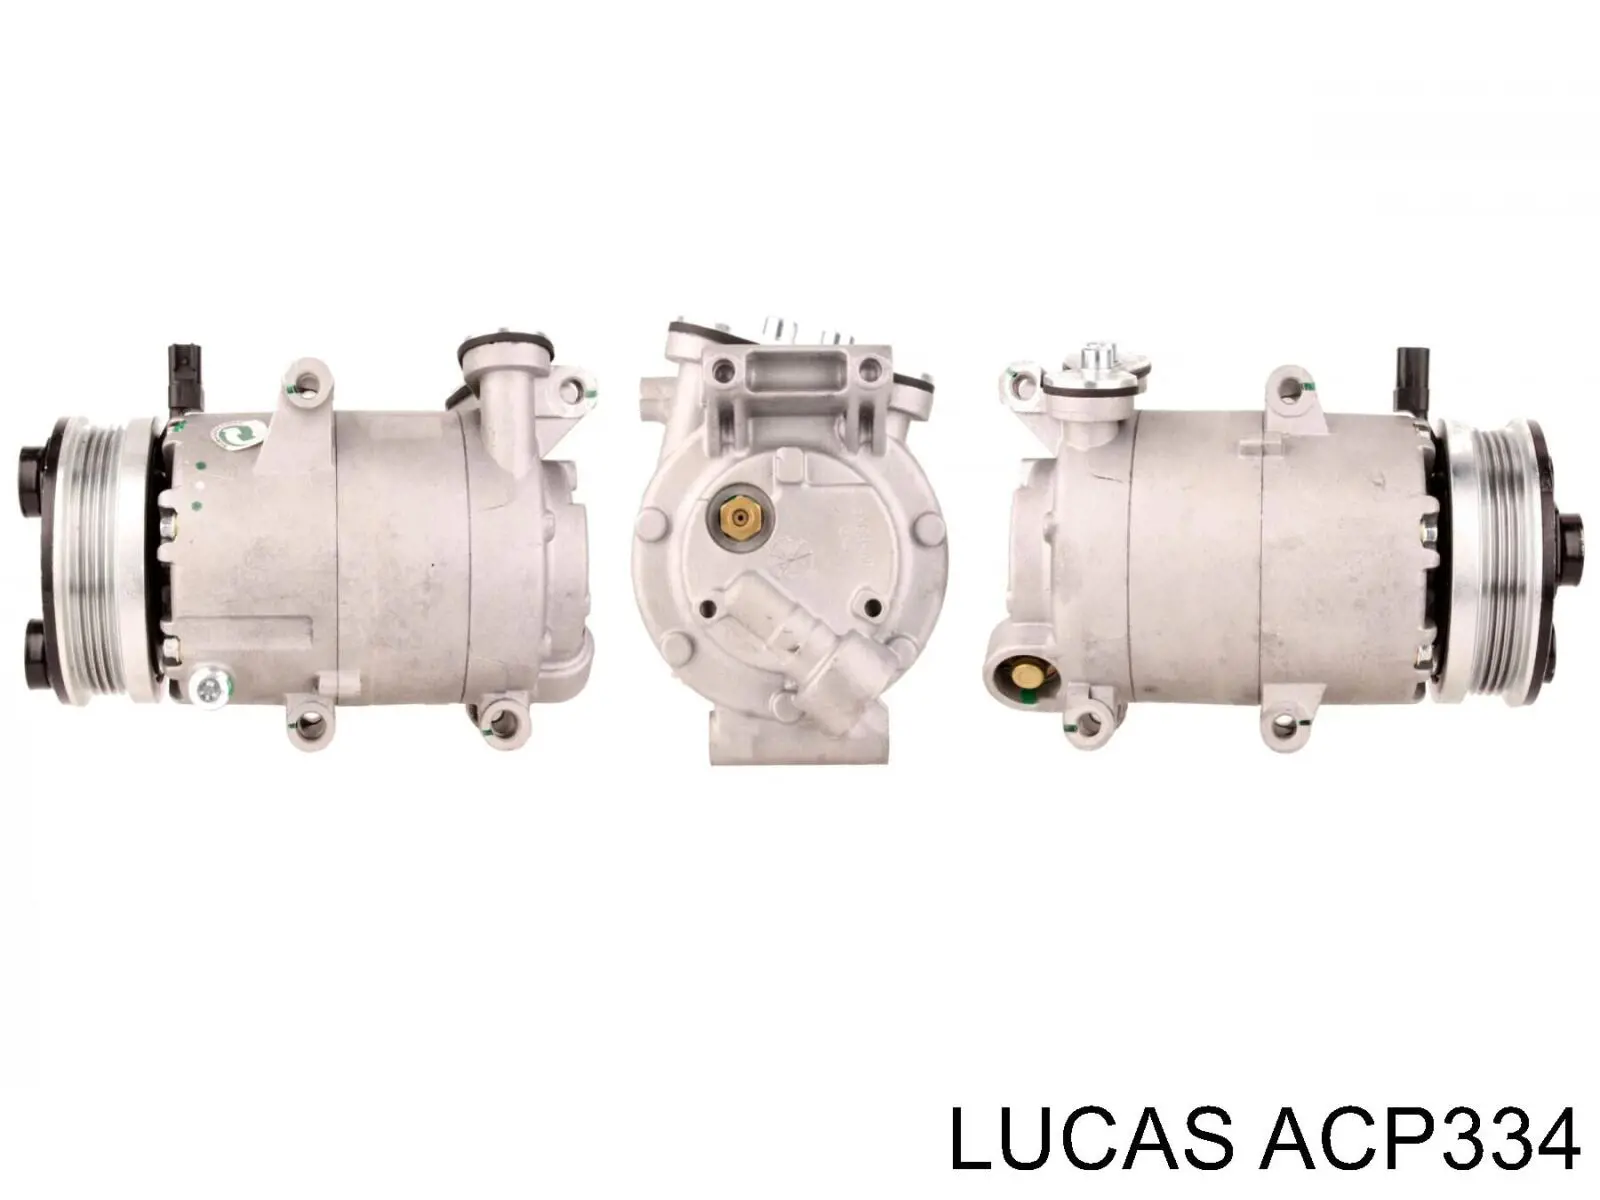 Compresor de aire acondicionado ACP334 Lucas